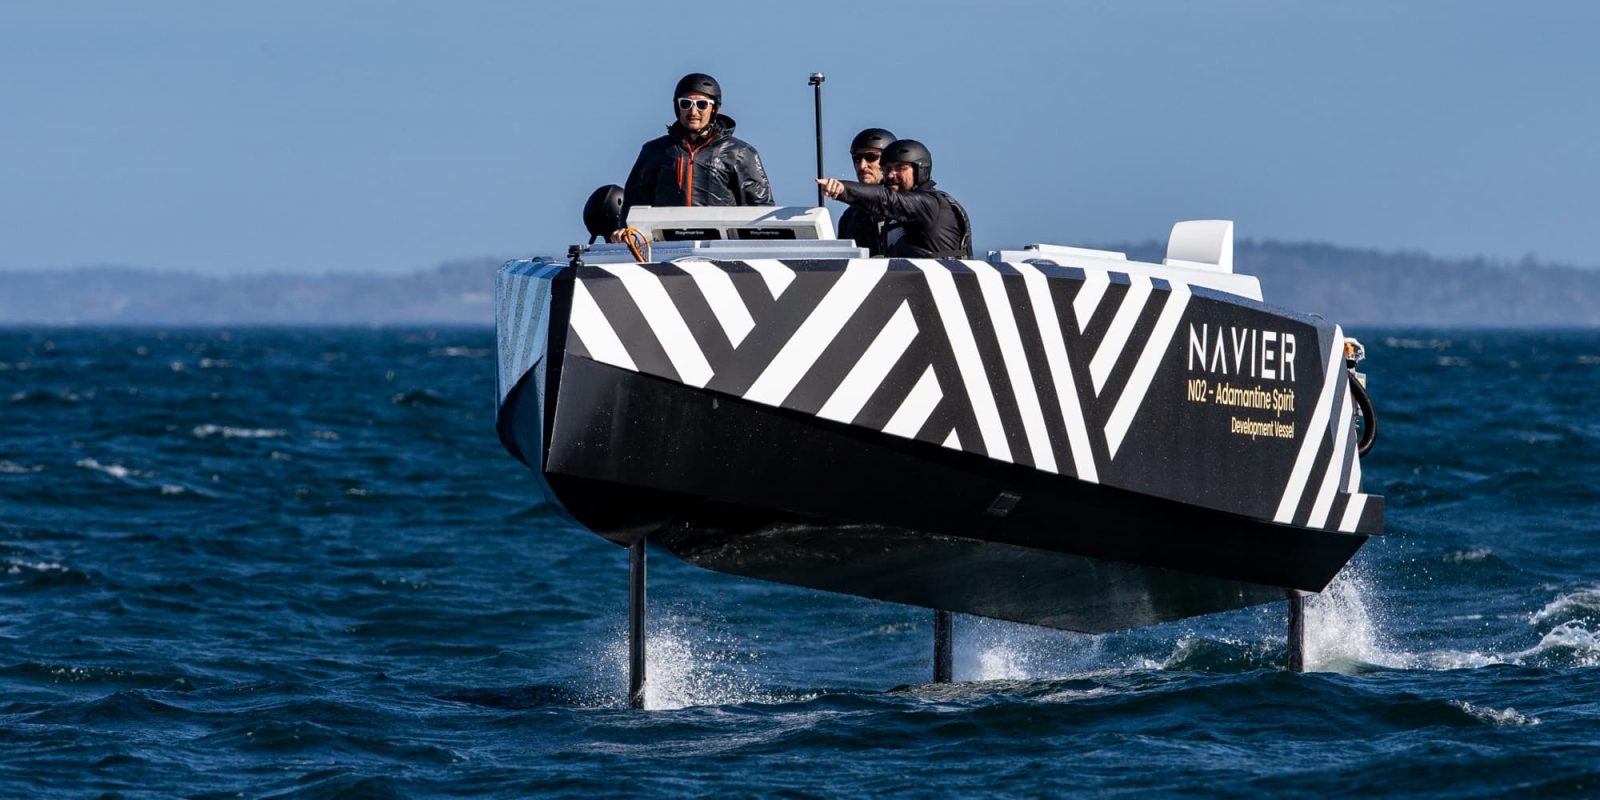 Navier's long range electric hydrofoil boat autonomously docks itself